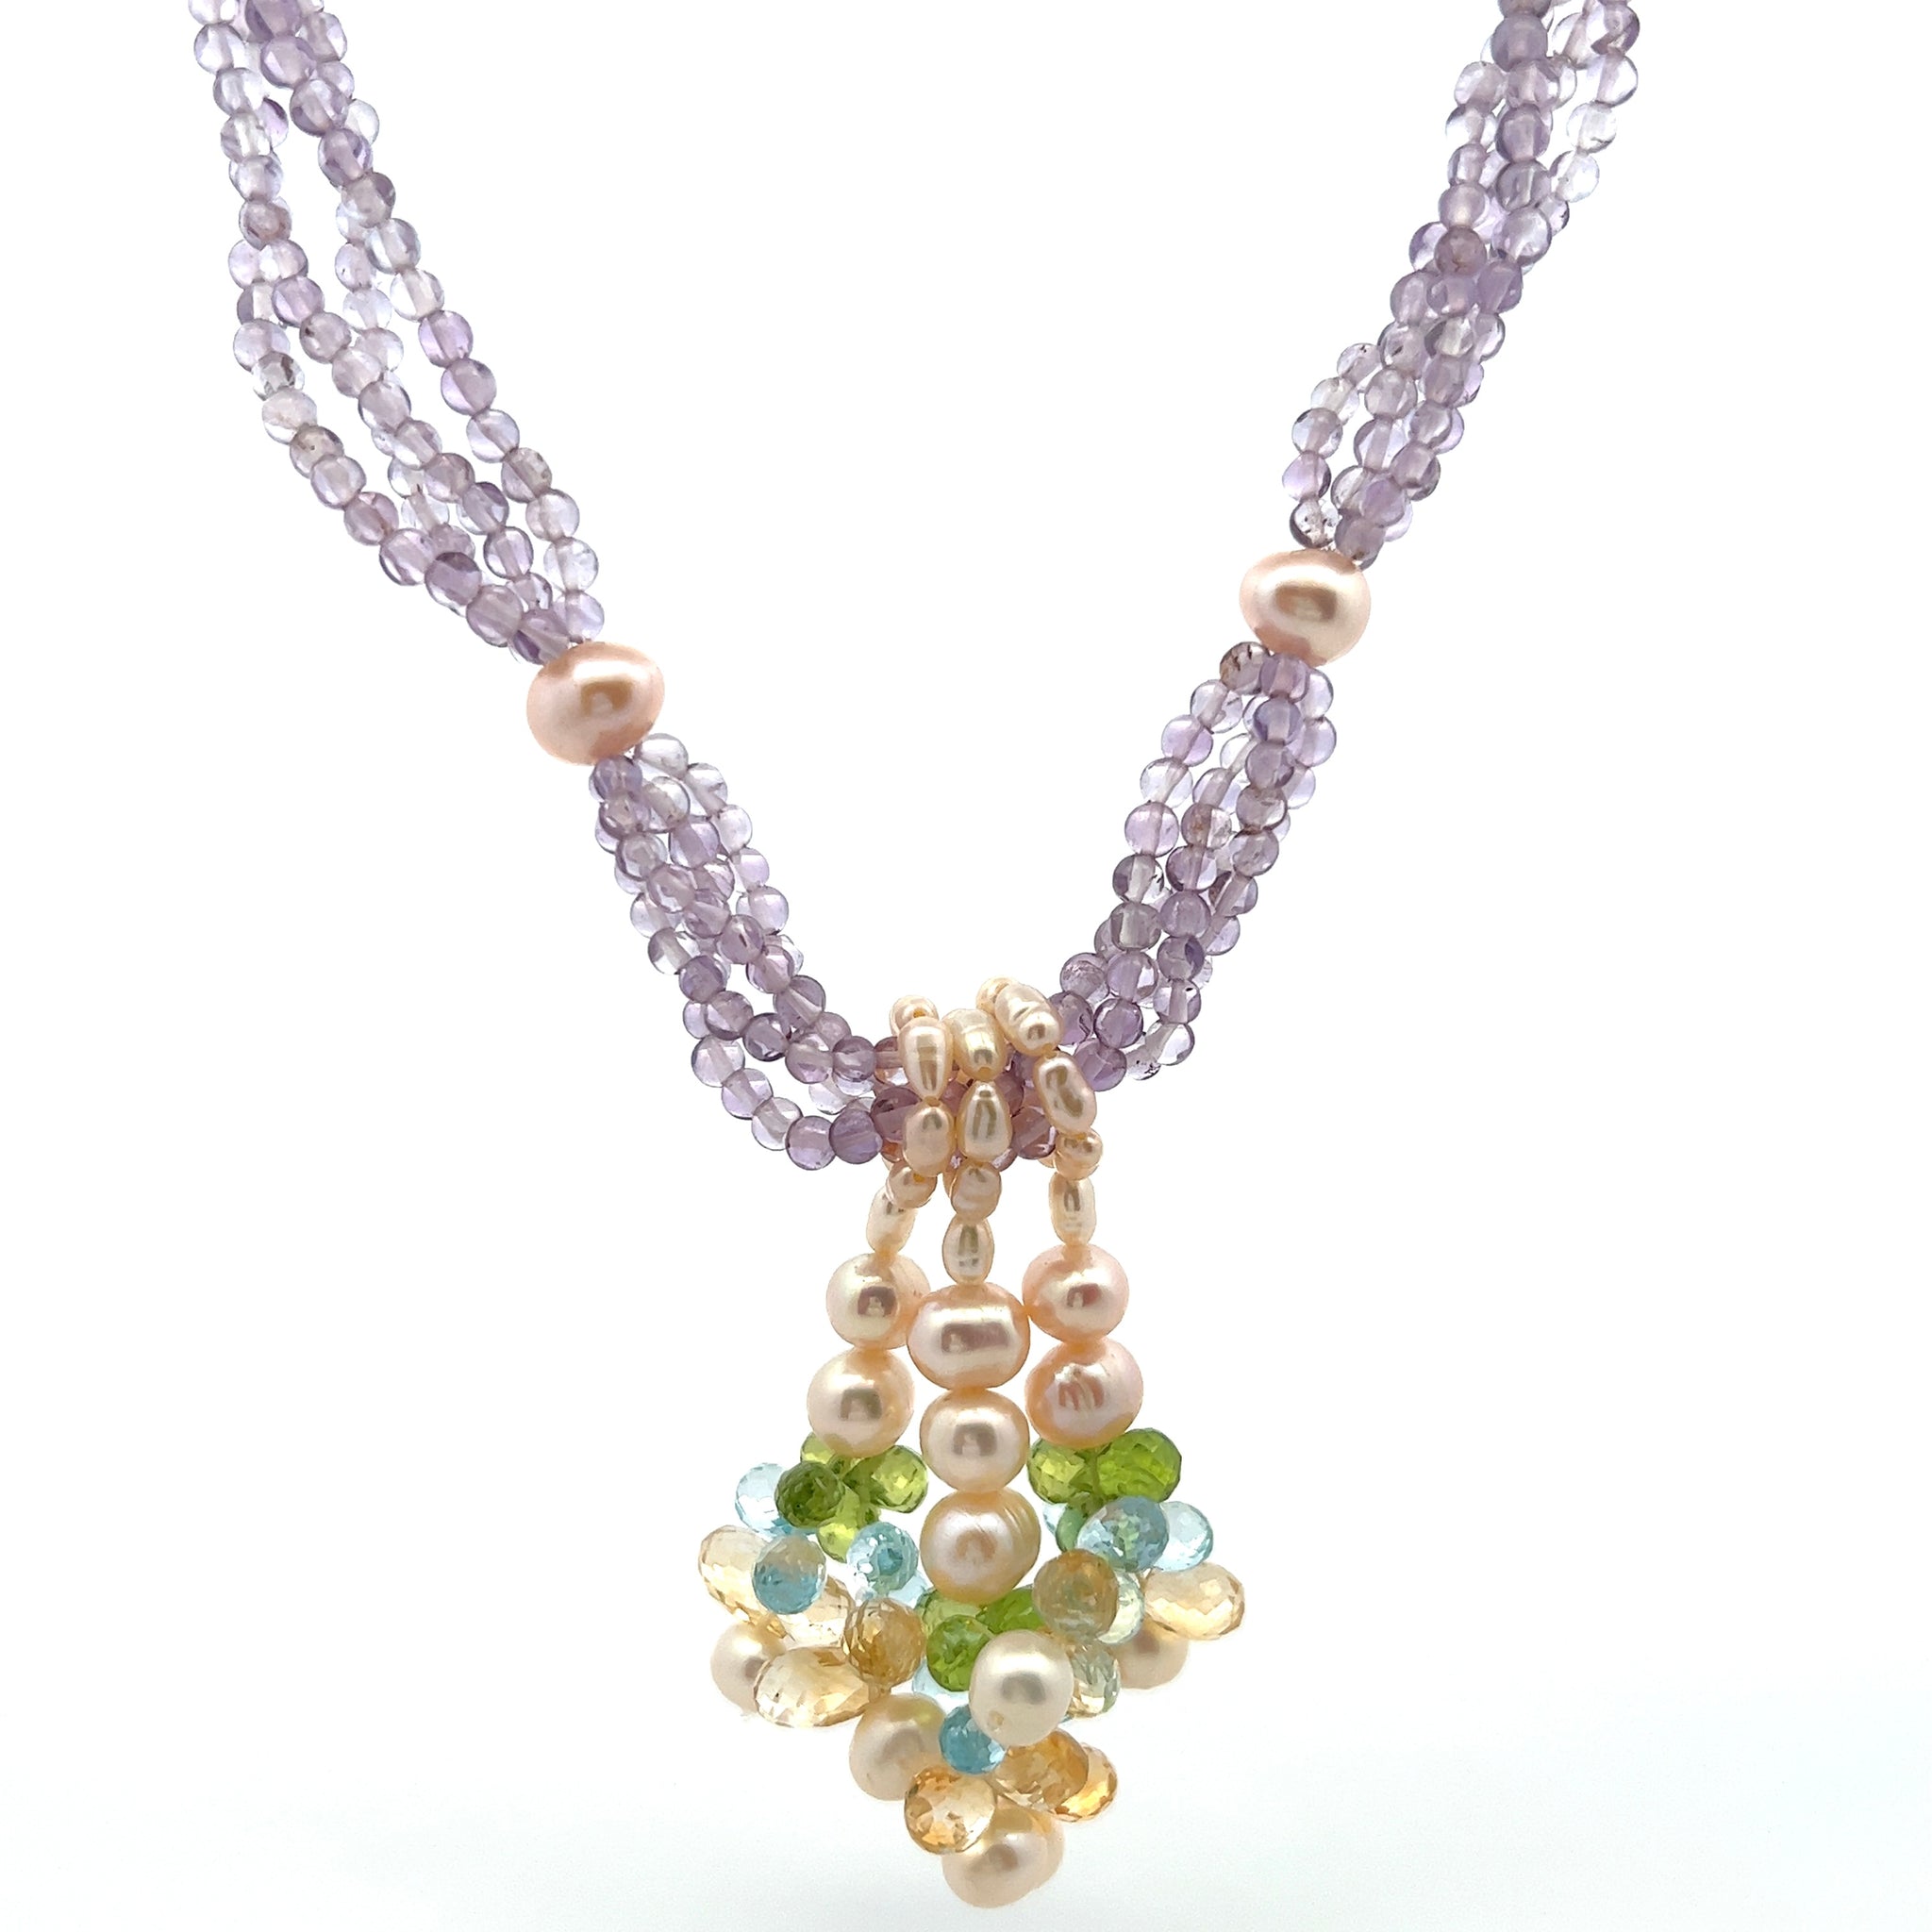 Natural Handmade Necklace 16"-18" Amethyst, Blue Topaz, Citrine, Peridot, Pearls Gemstone Beads Jewelry